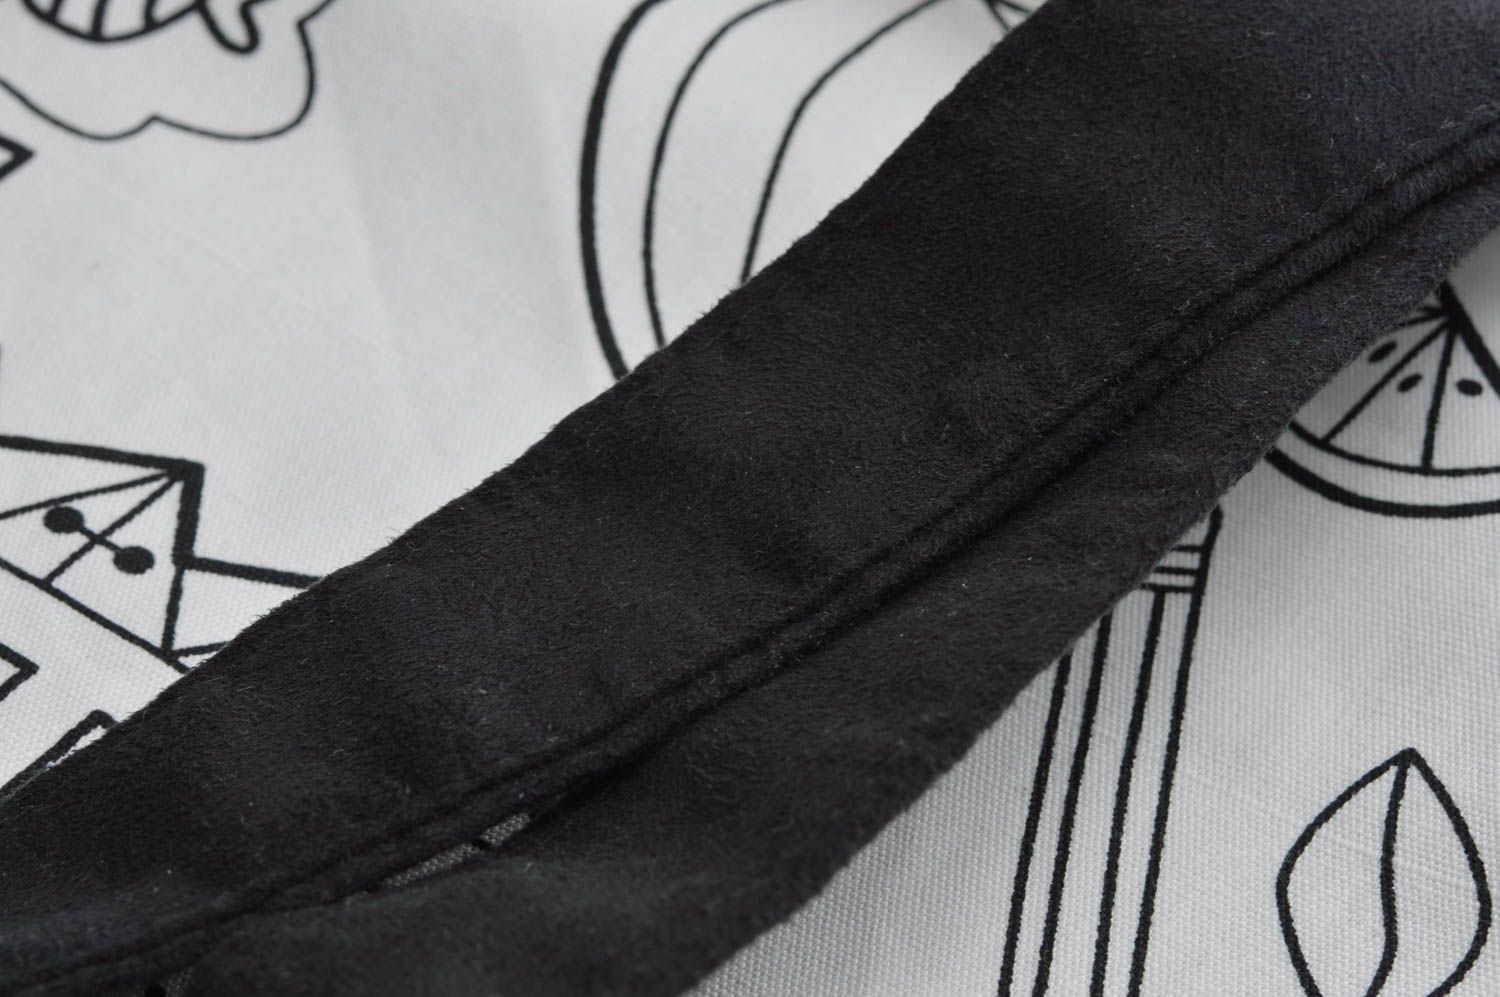 Stylish handmade fabric shoulder bag textile bag designs fashion accessories photo 5